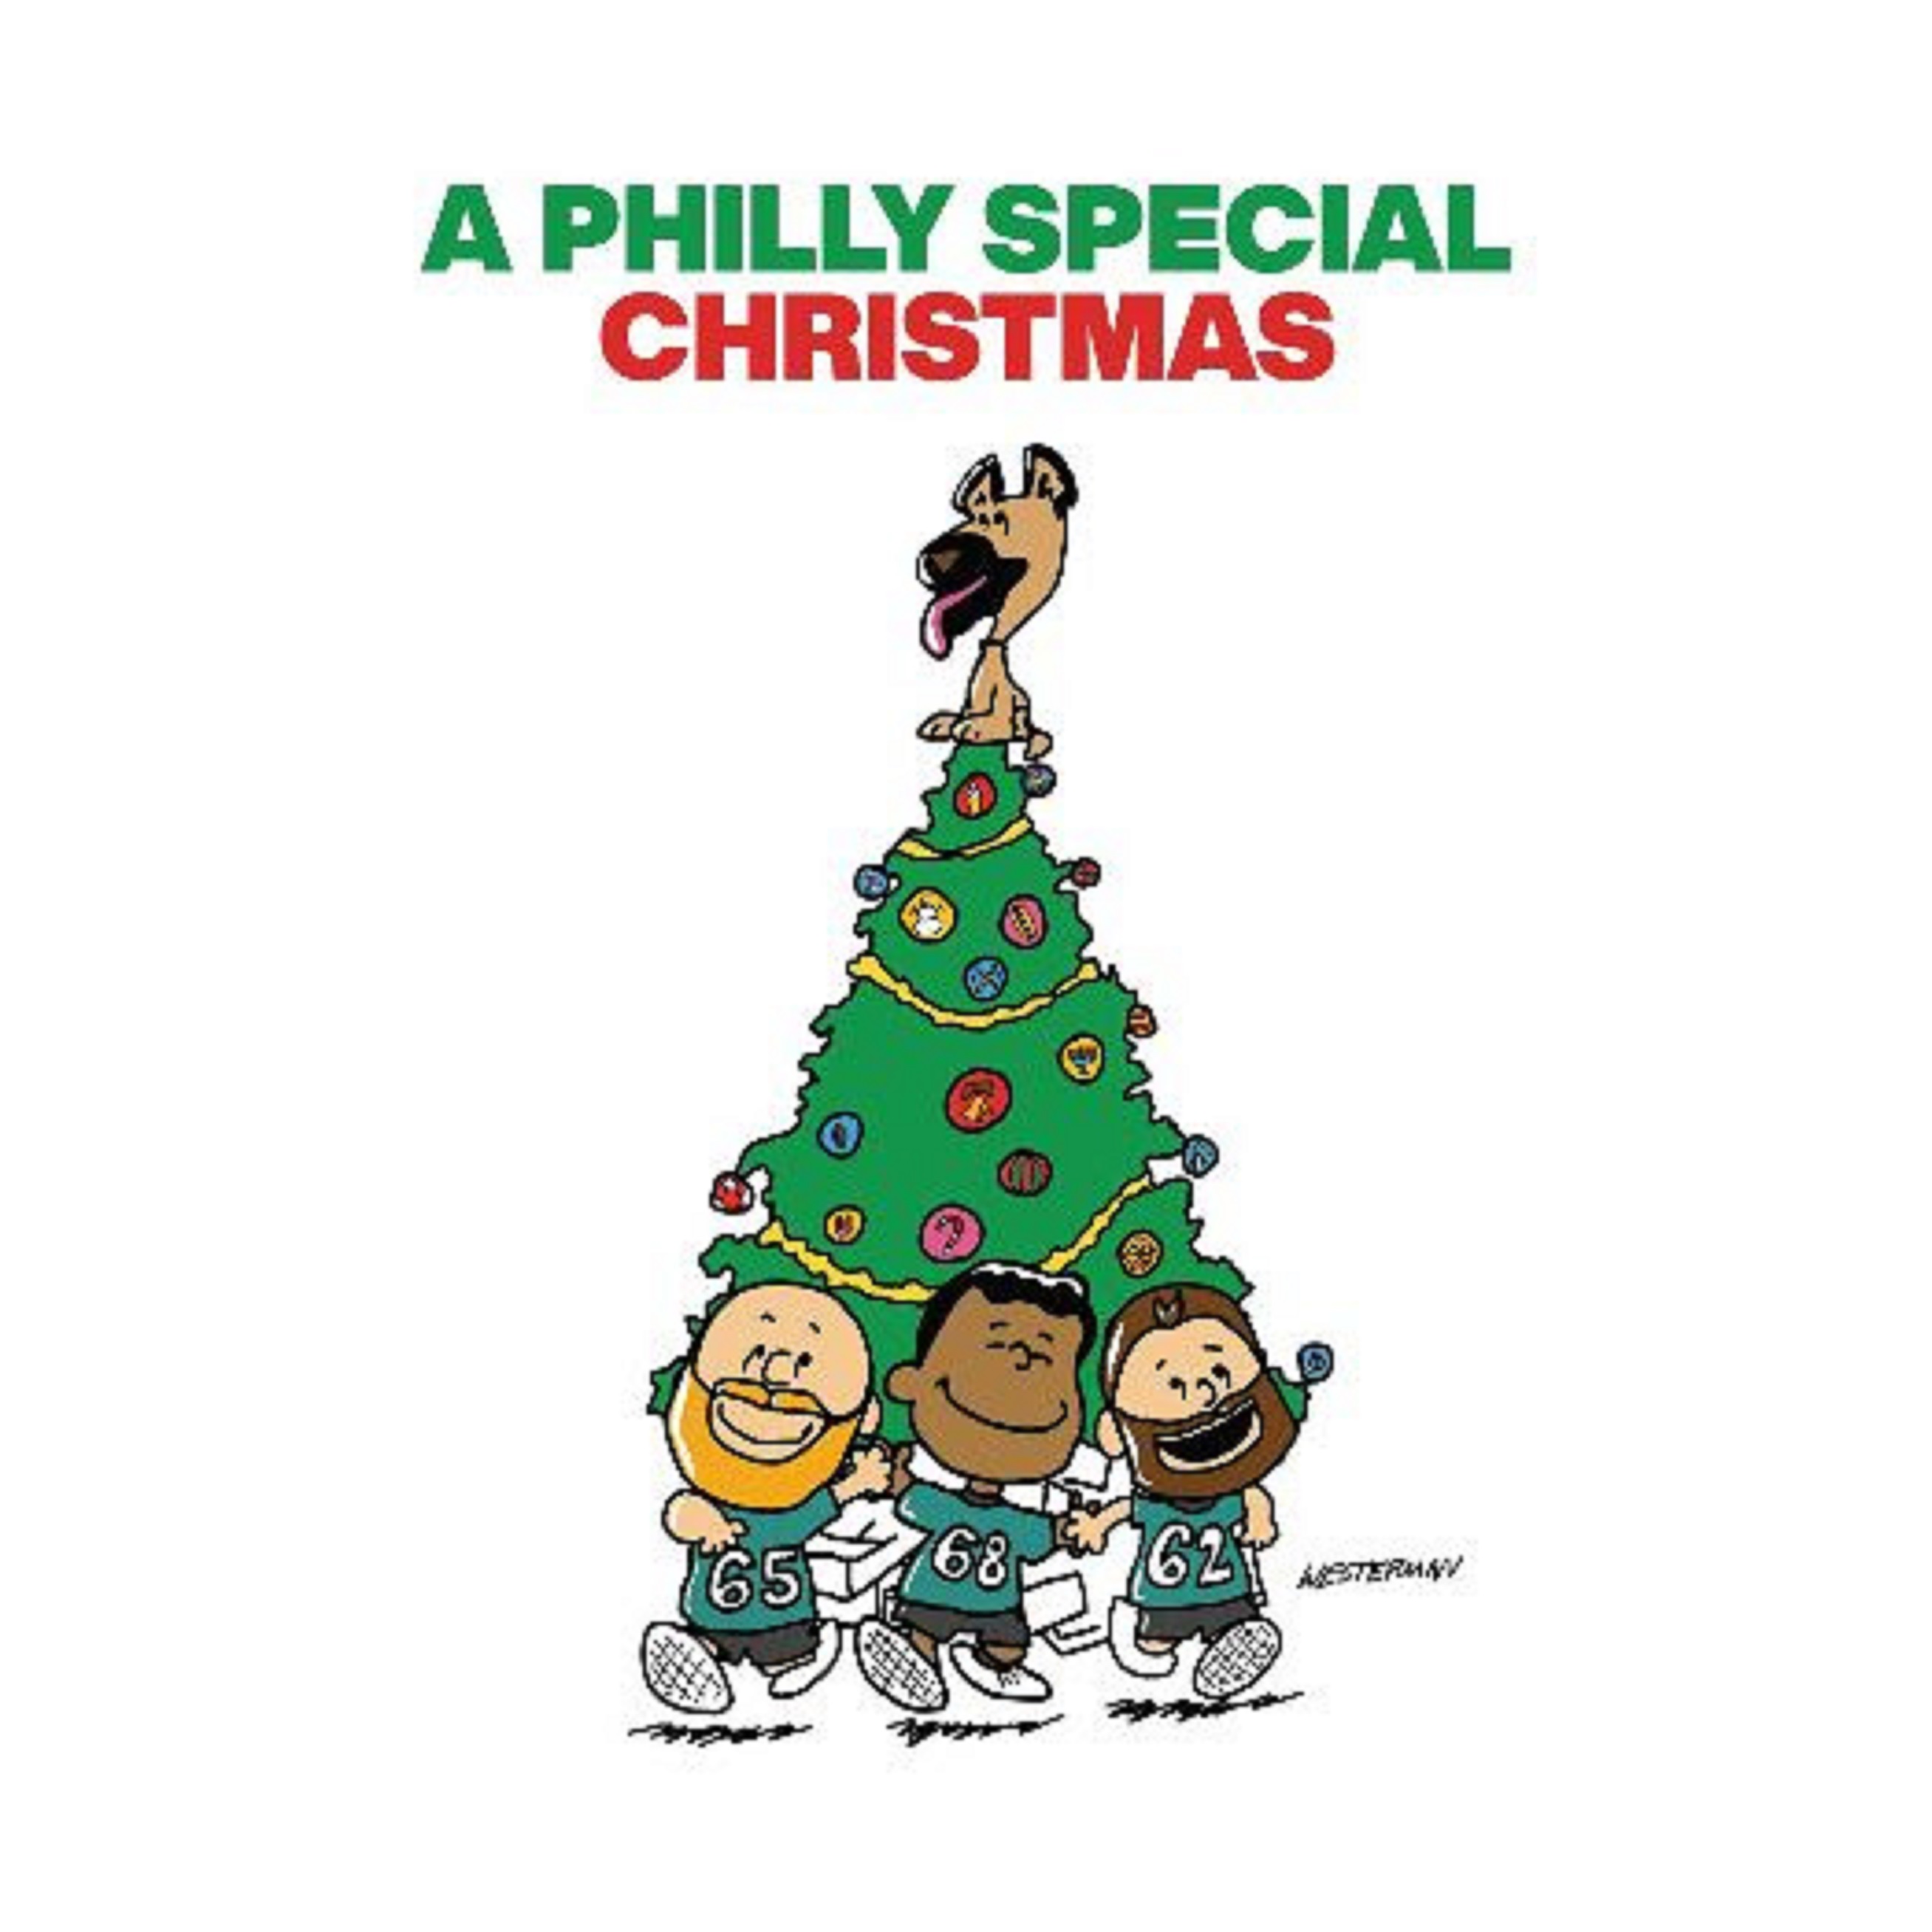 philadelphia eagles christmas album where to buy